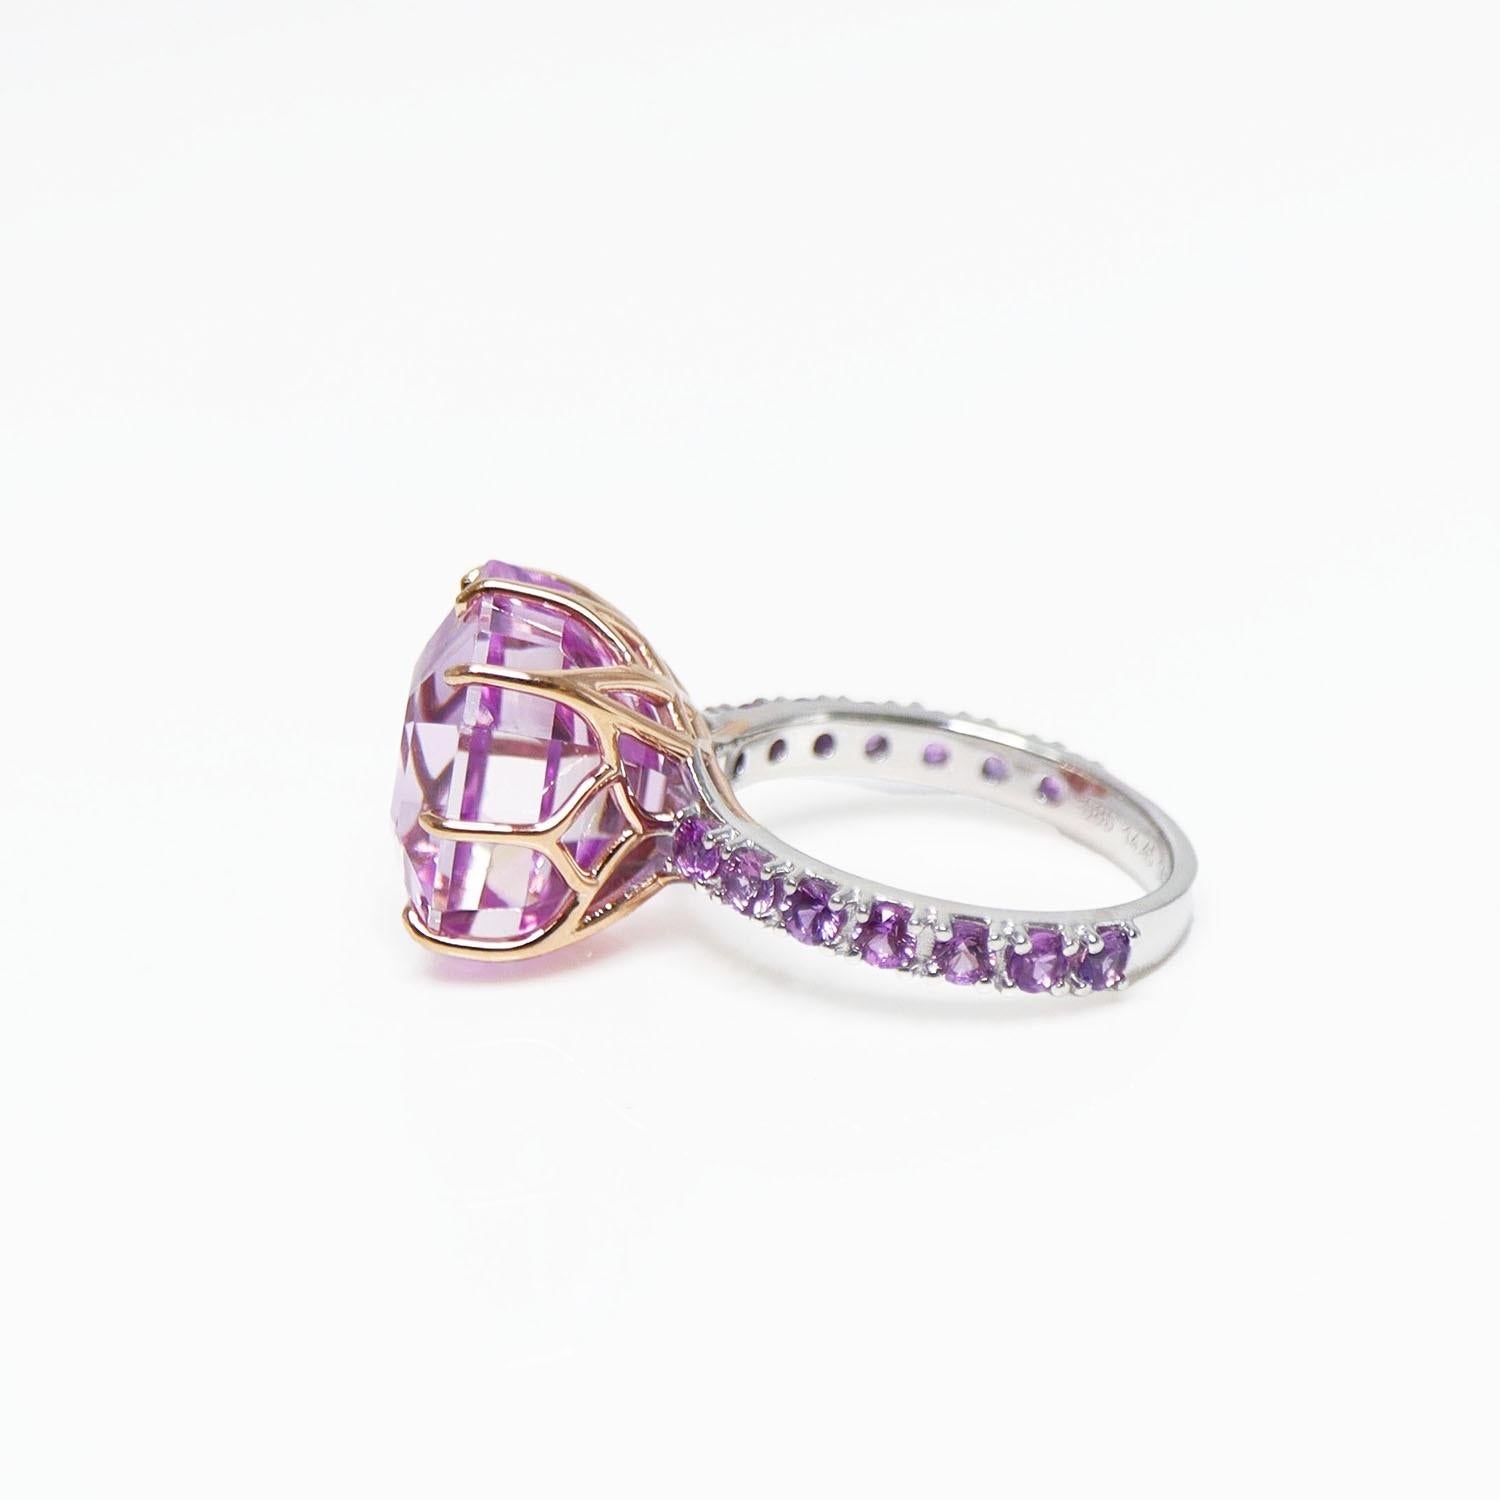 IGI 14K 14.45 Ct Kunzite&Pink Sapphires Antique Art Deco Style Engagement Ring 1